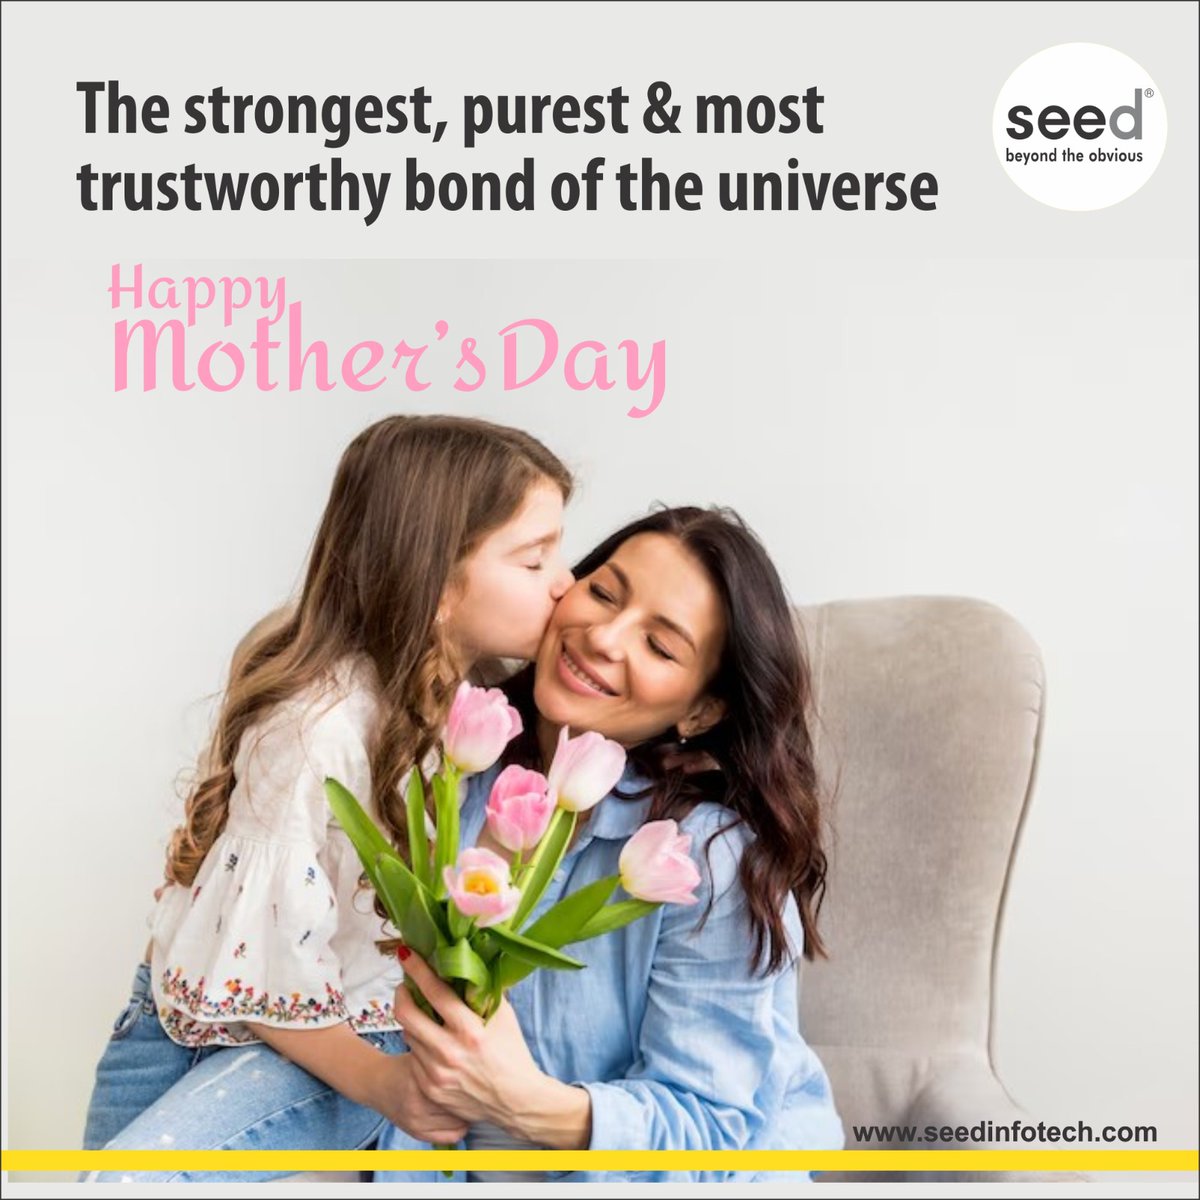 Happy Mother's Day 🤗

👉Call -: 9225520000
➡️Visit -: seedinfotech.com

#मातृ_दिवस #seed #ittraining